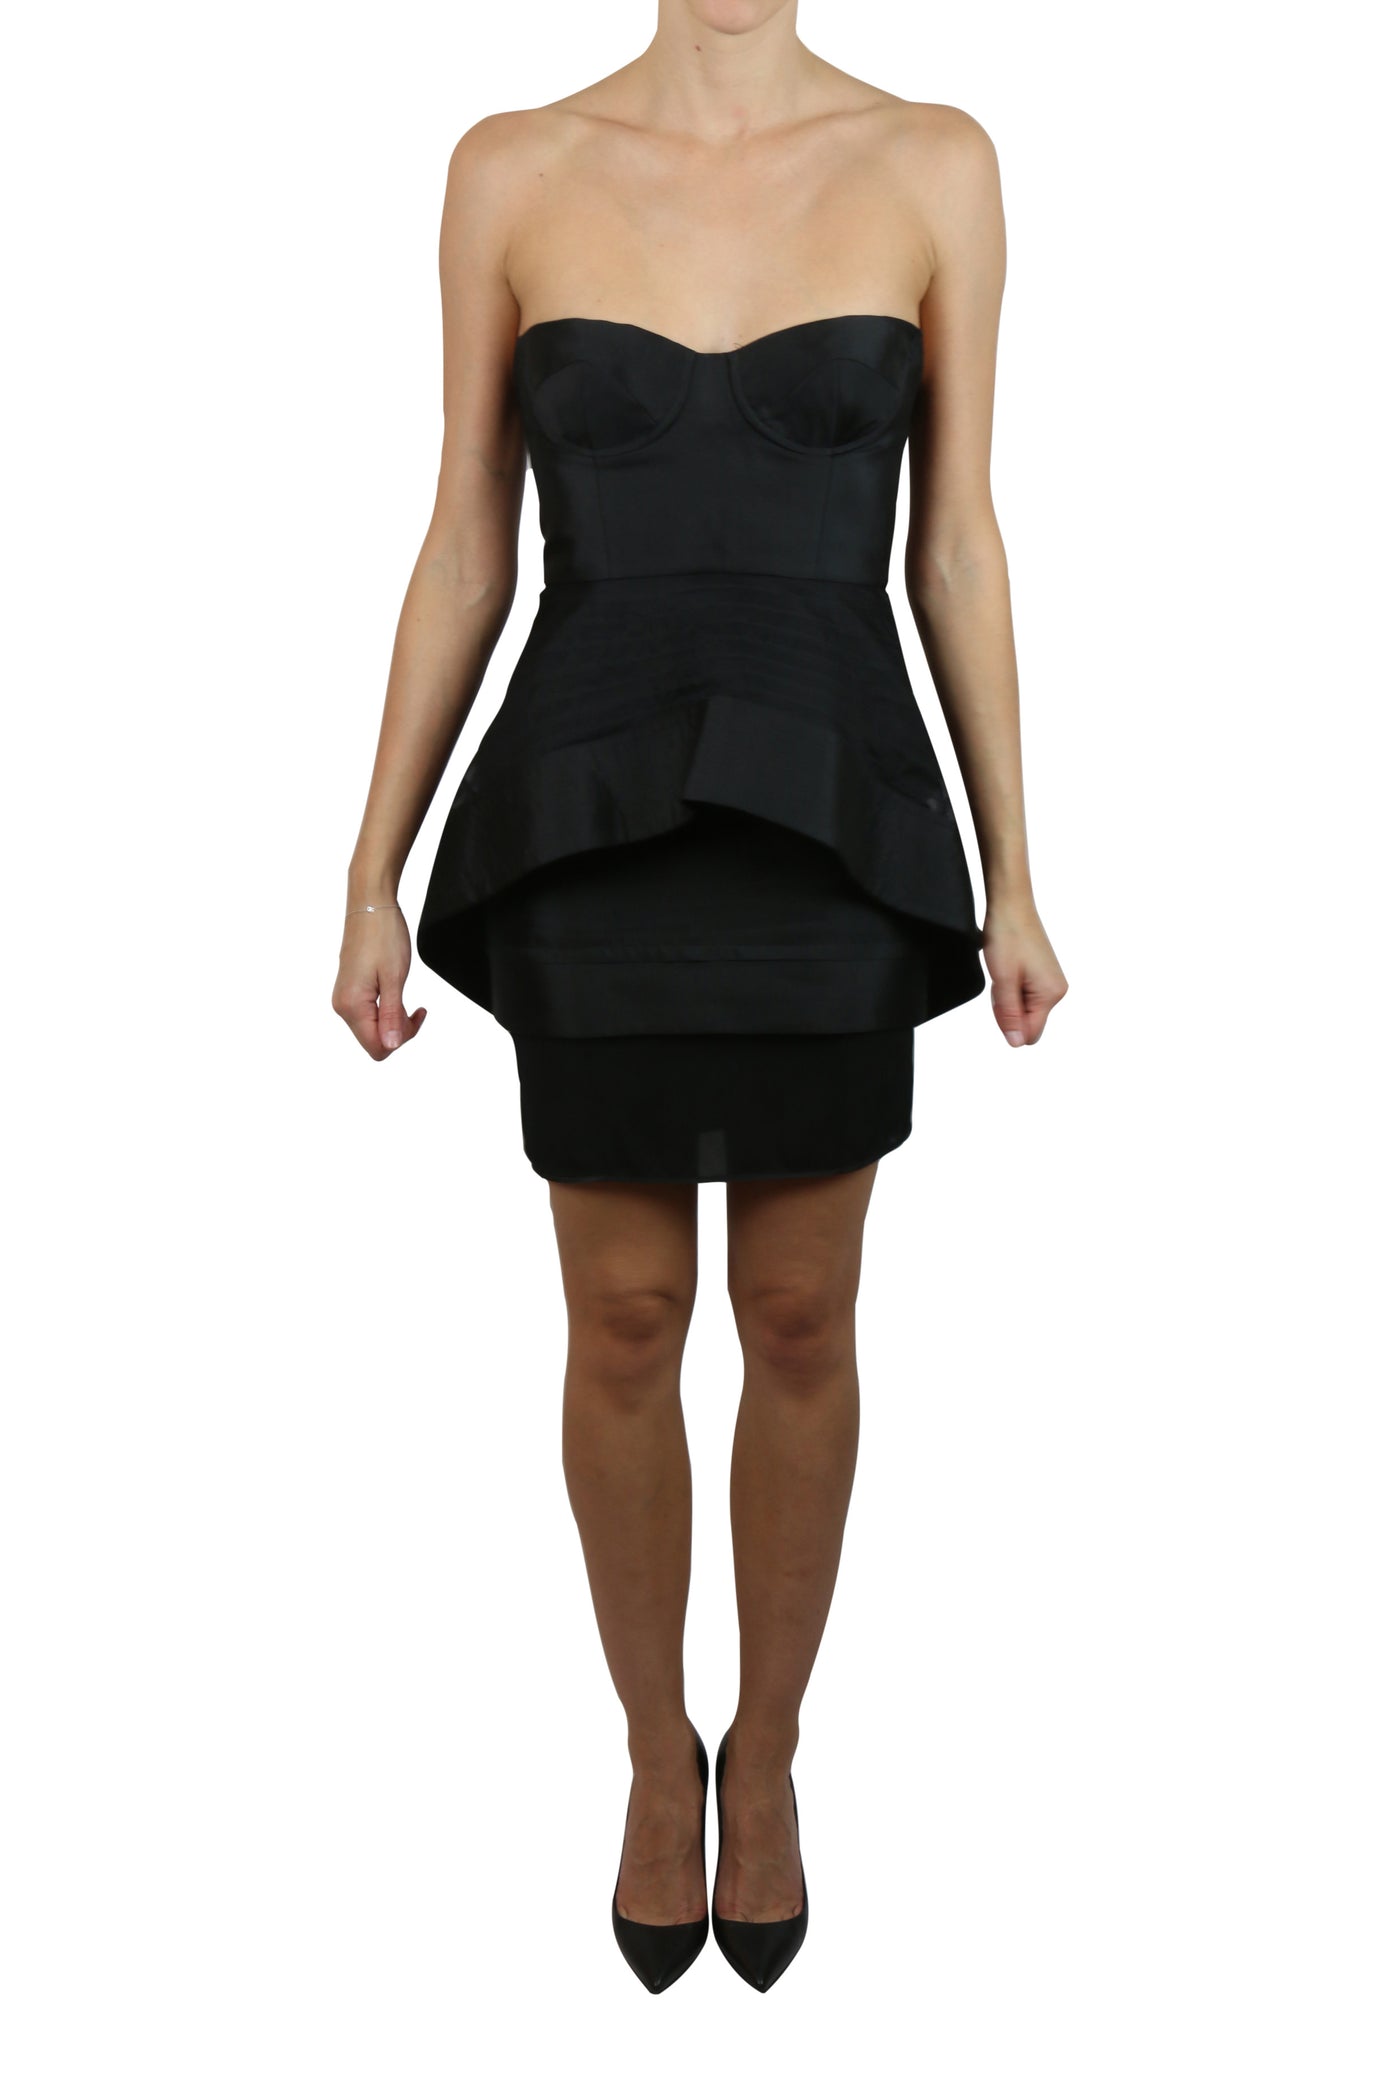 Black silk corset dress